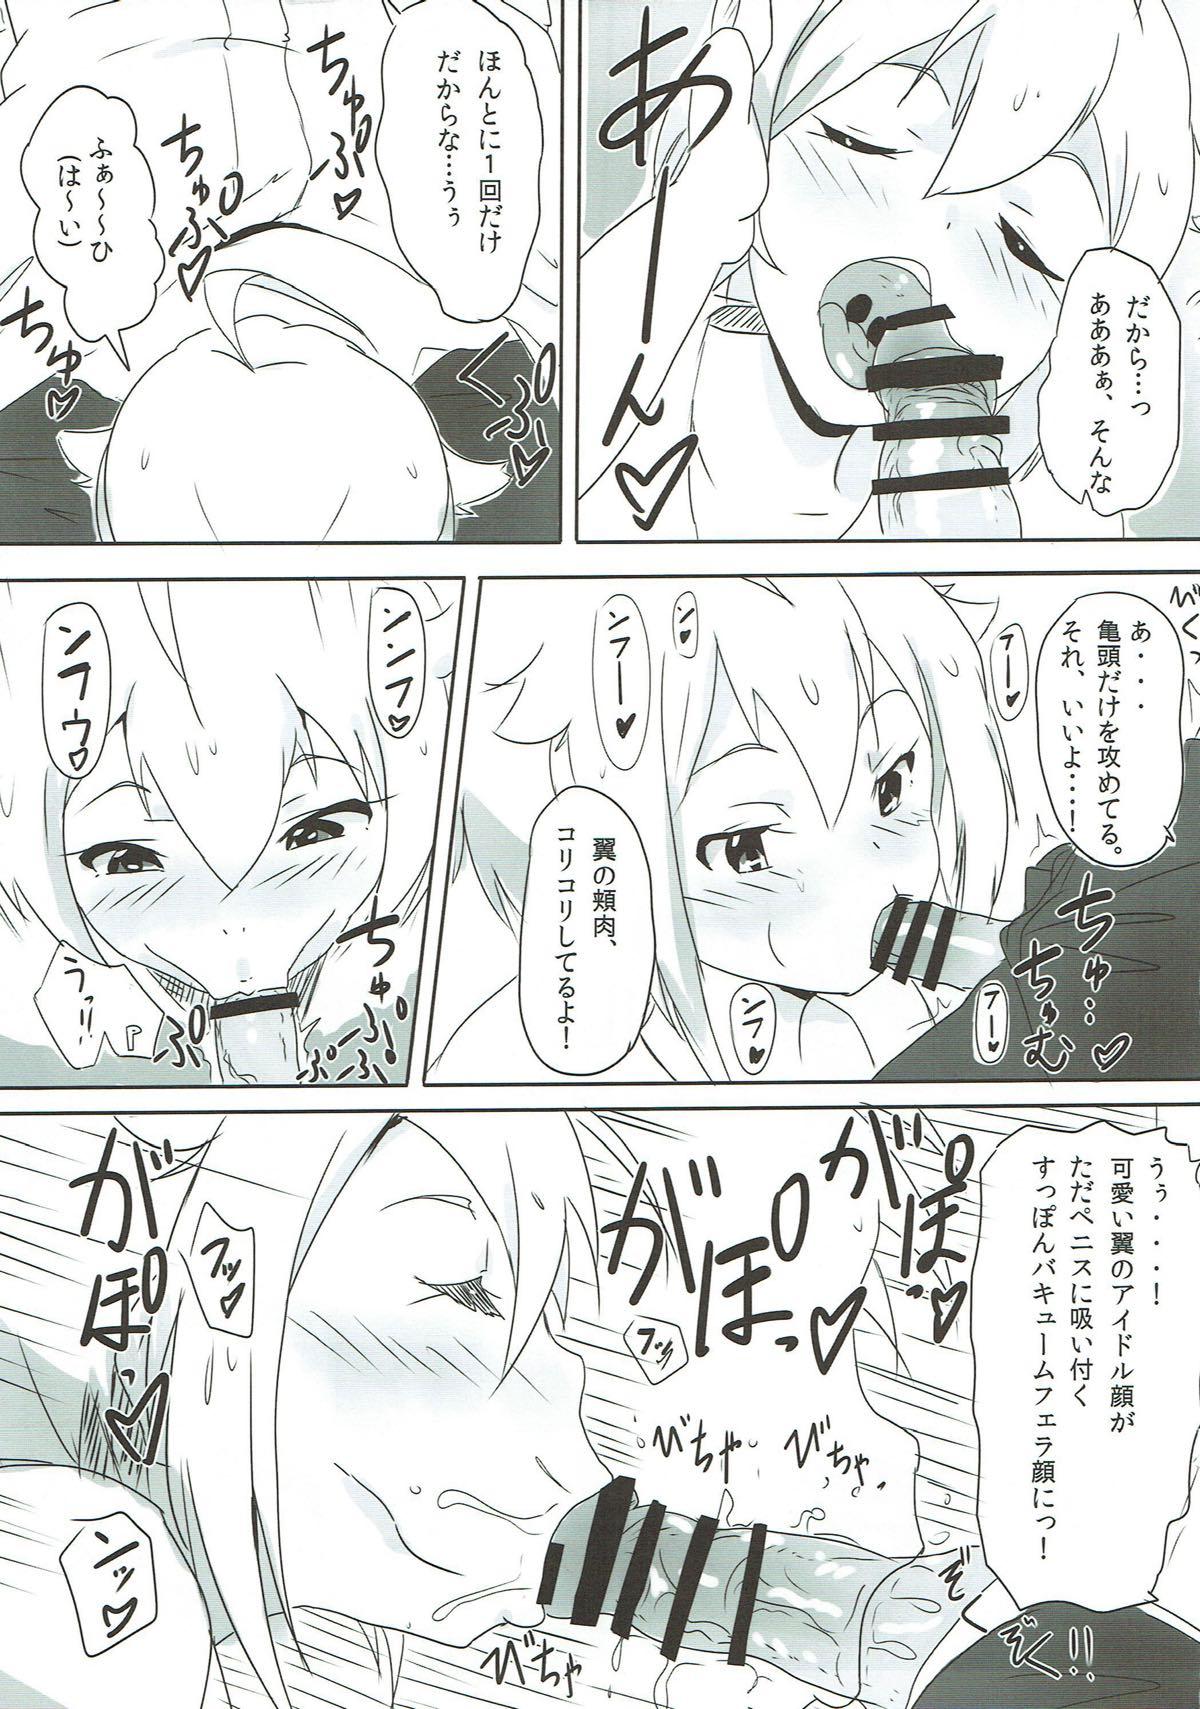 Bj OH! Mighty Sailor Tsubasa! - The idolmaster Fishnet - Page 4